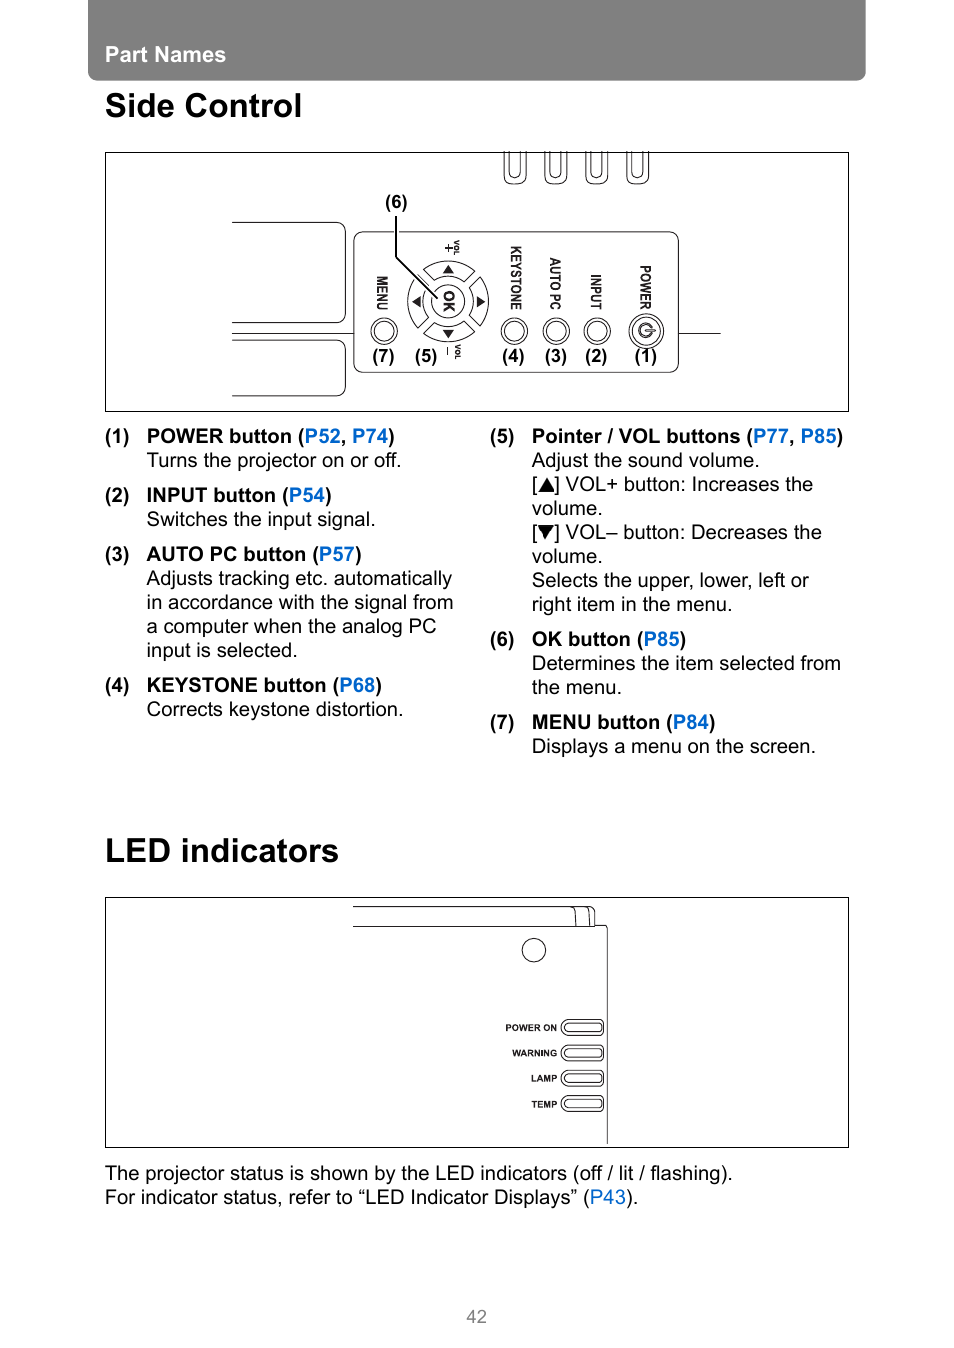 Side control, Led indicators, Side control led indicators | Canon XEED WUX450 User Manual | Page 42 / 314